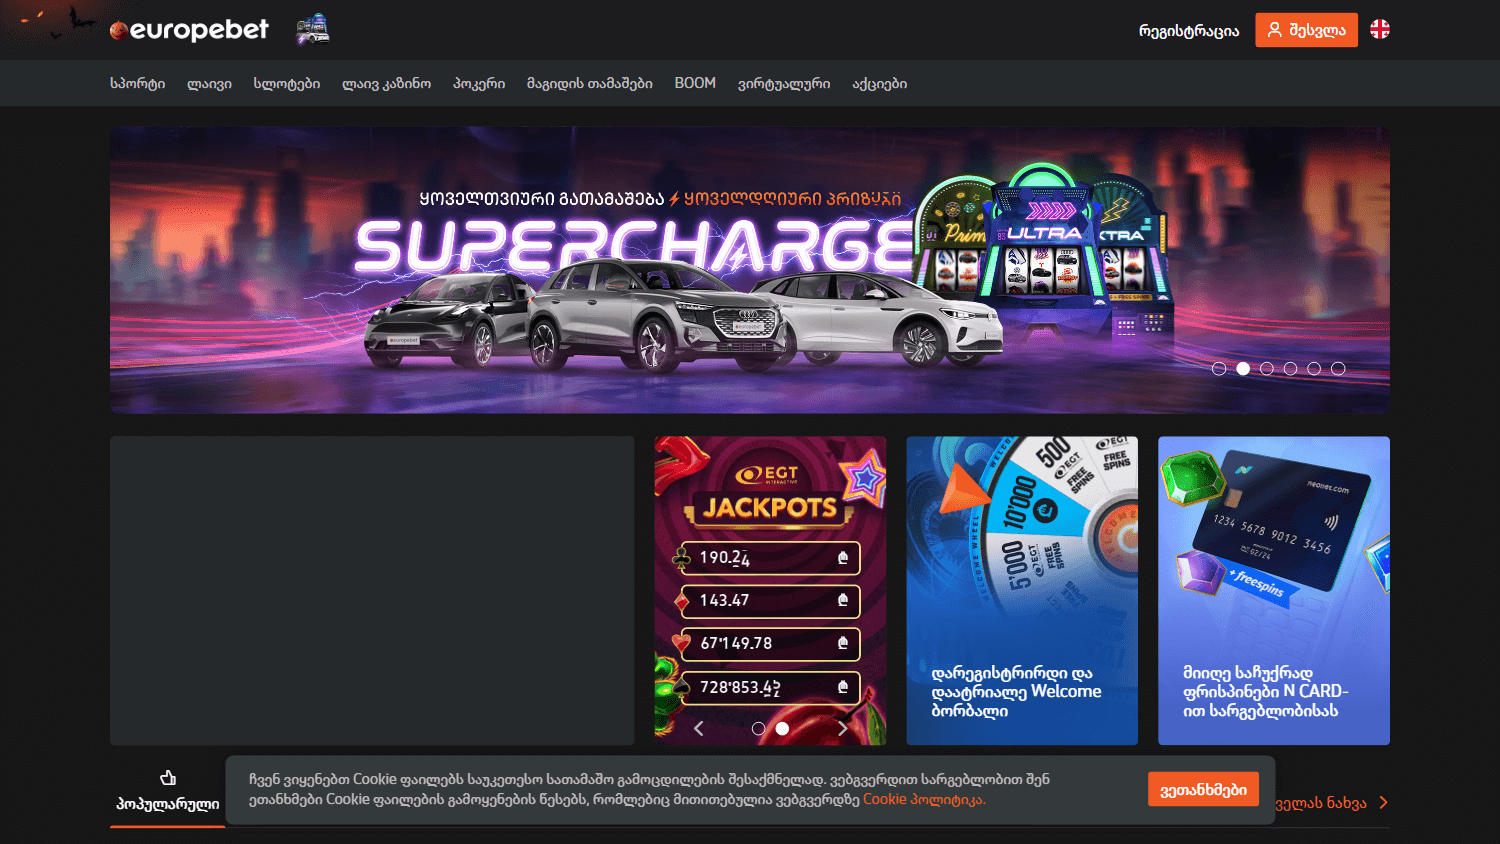 europebet_casino_homepage_desktop